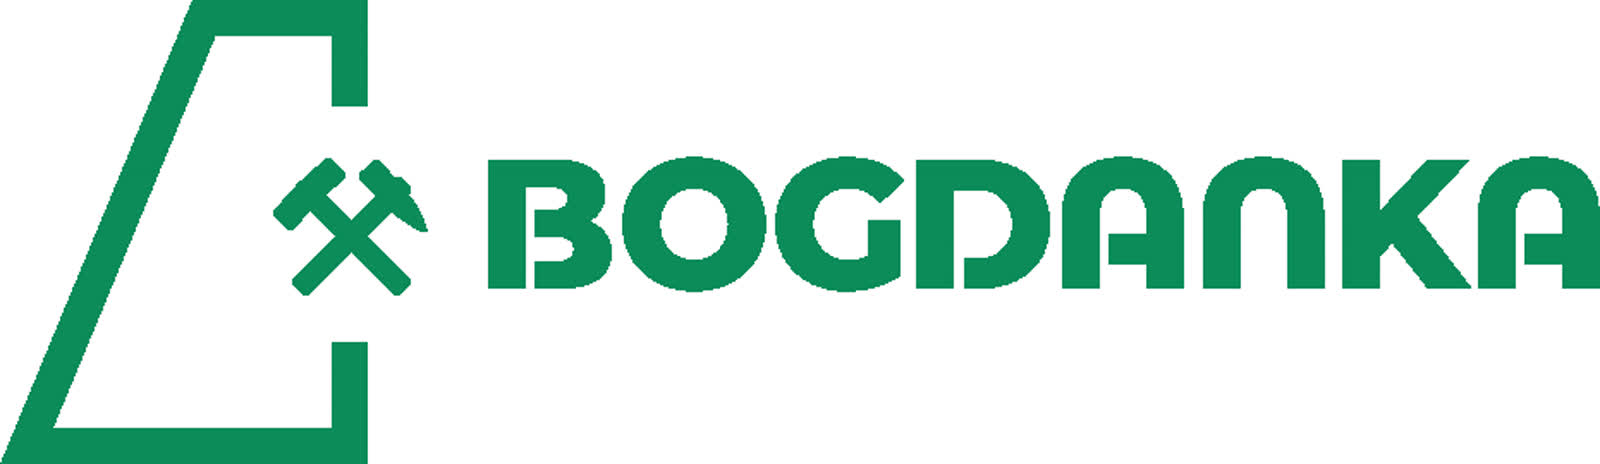 logo_kolor_rgb.png